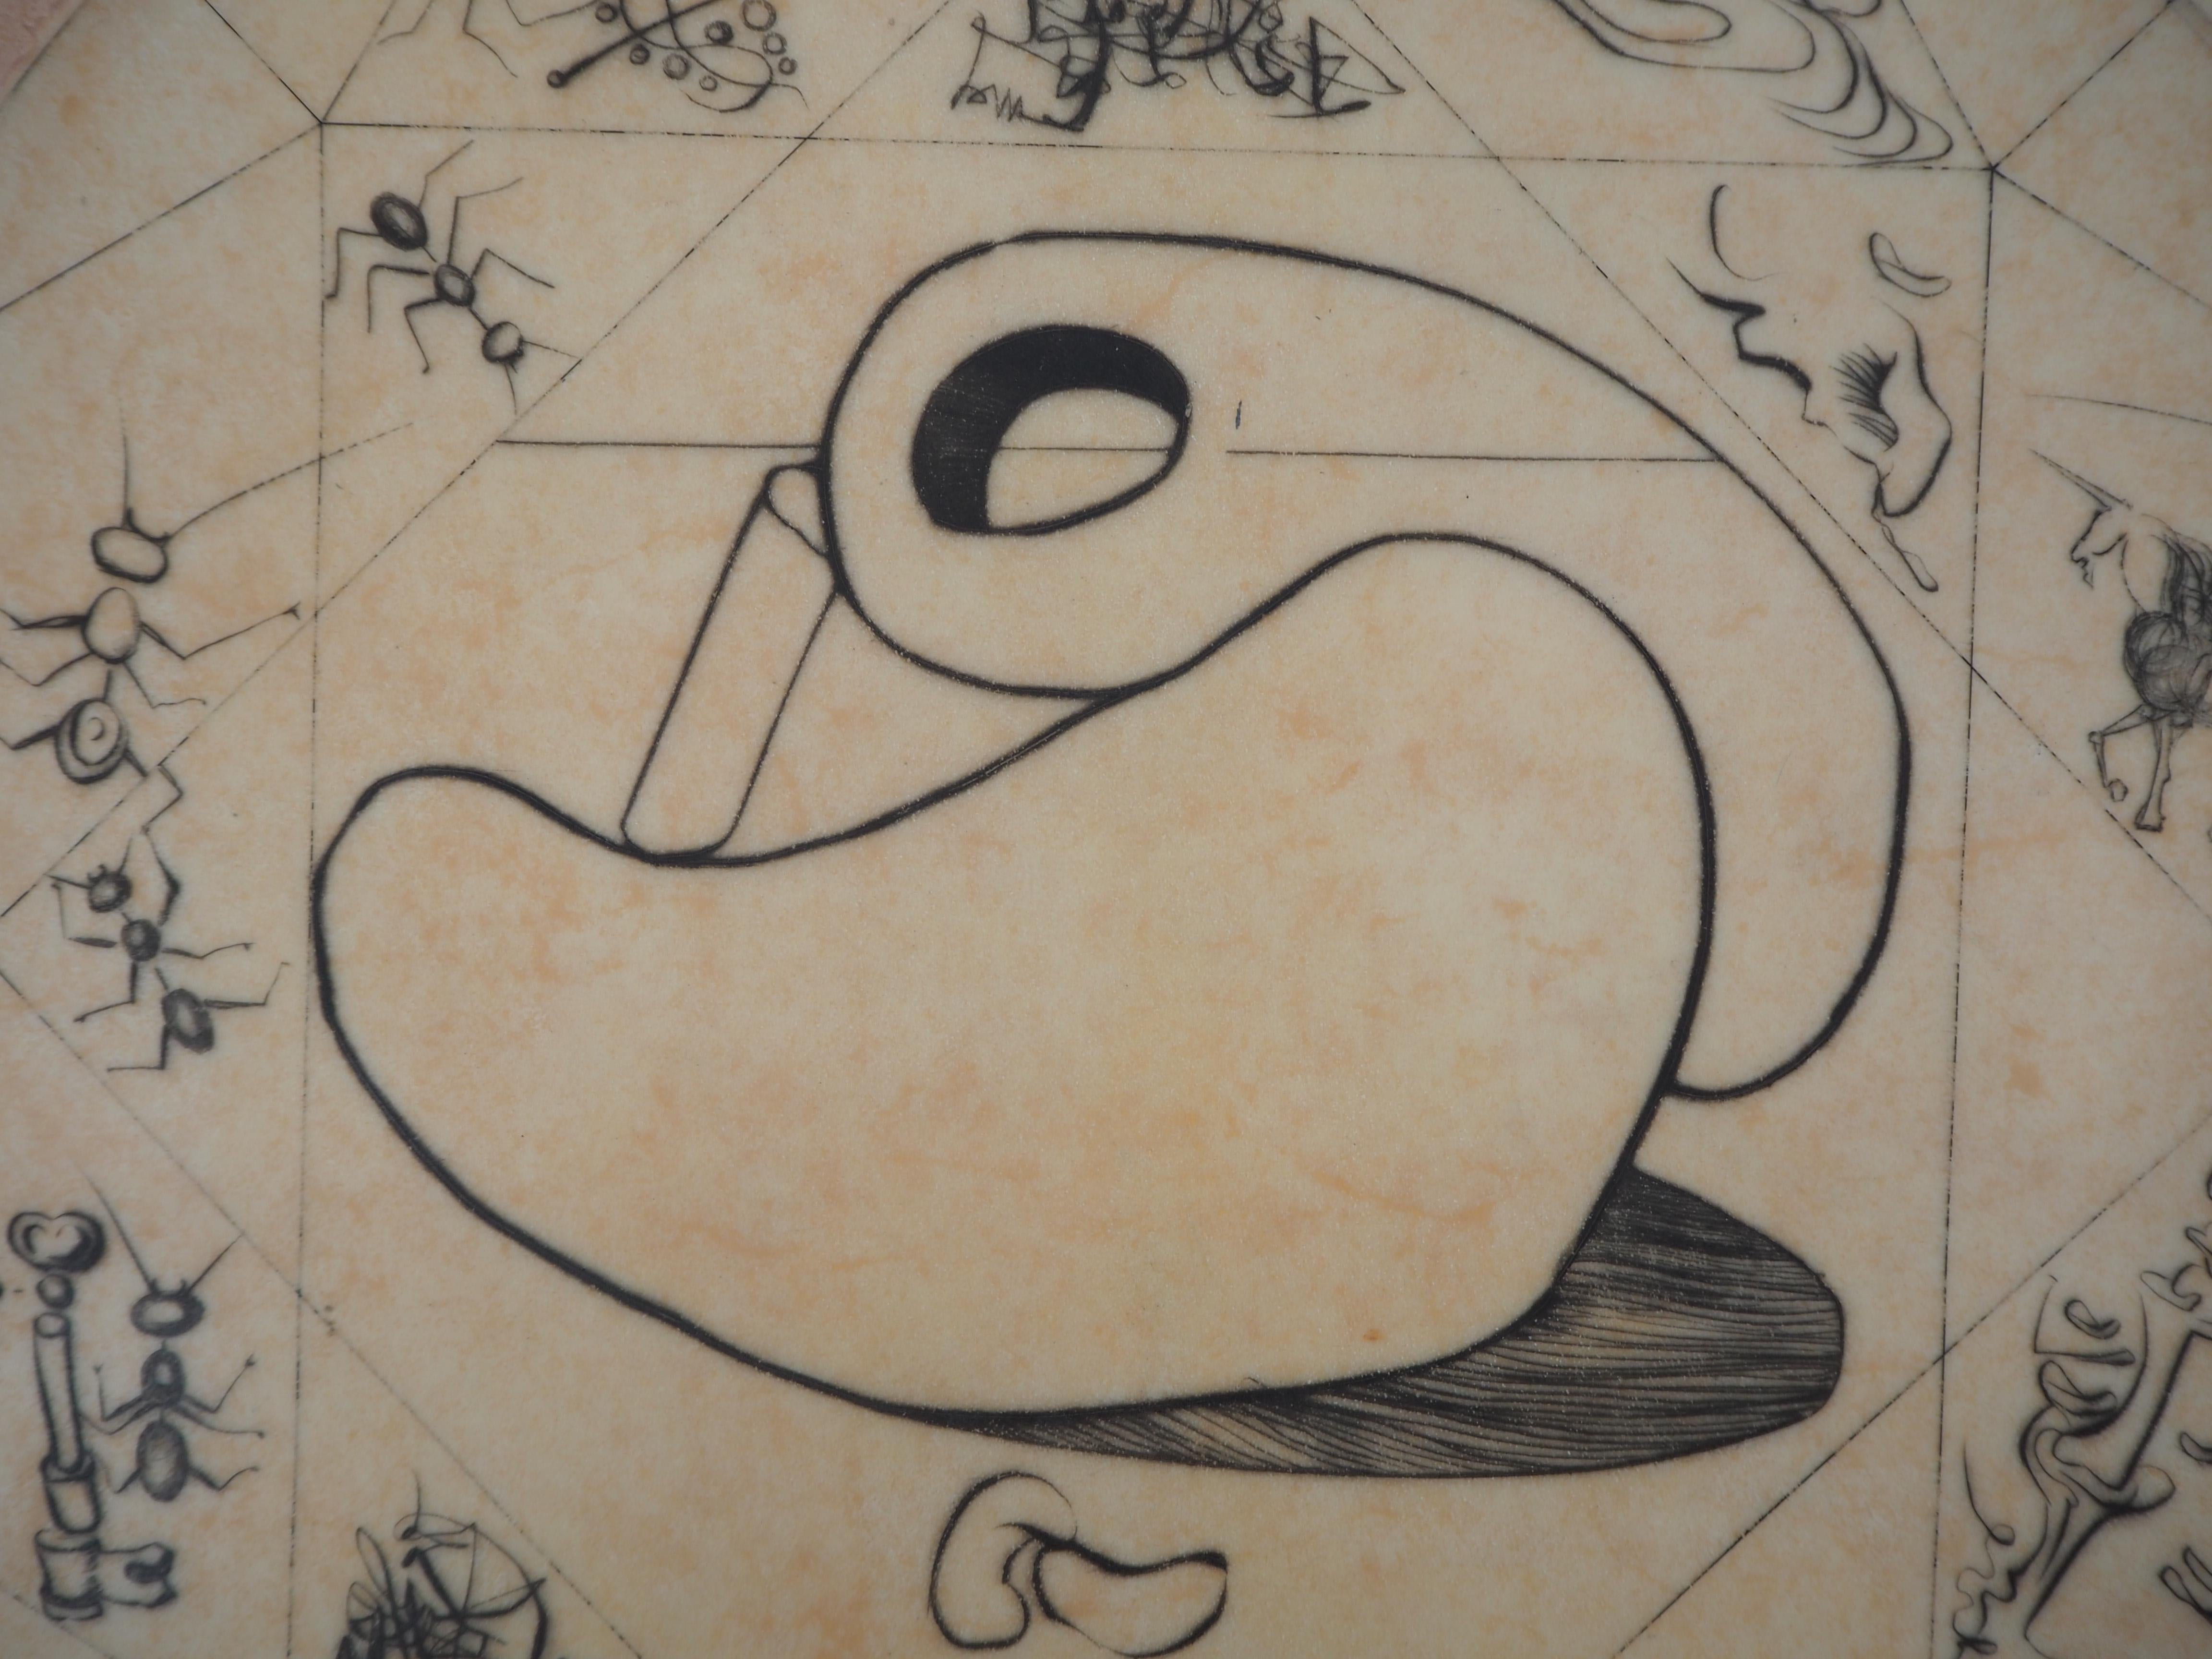 Alchemy : The Wheel (Ouroboros) - Original Lithograph, Handsigned (Field #75-12) - Brown Figurative Print by Salvador Dalí